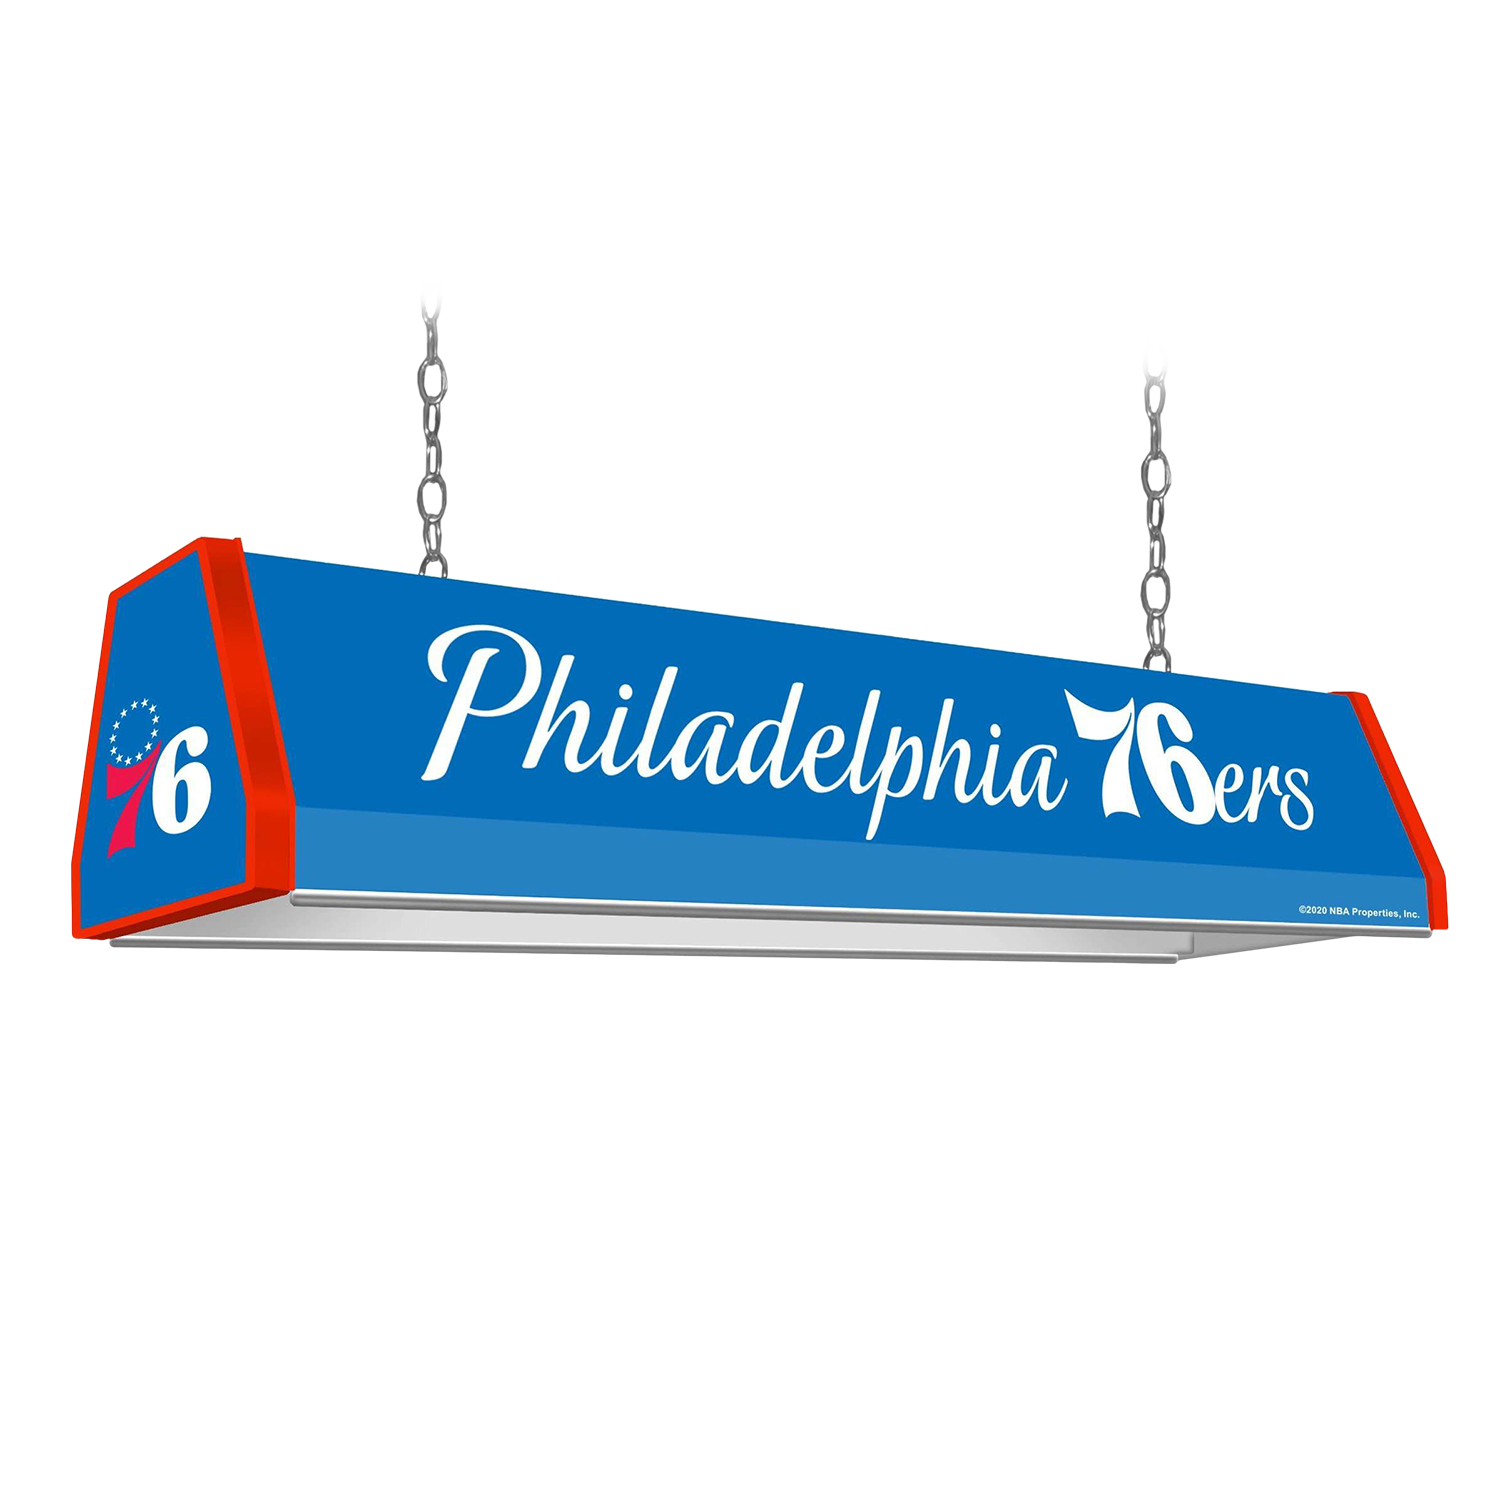 Philadelphia 76ers: Standard Pool Table Light - The Fan-Brand